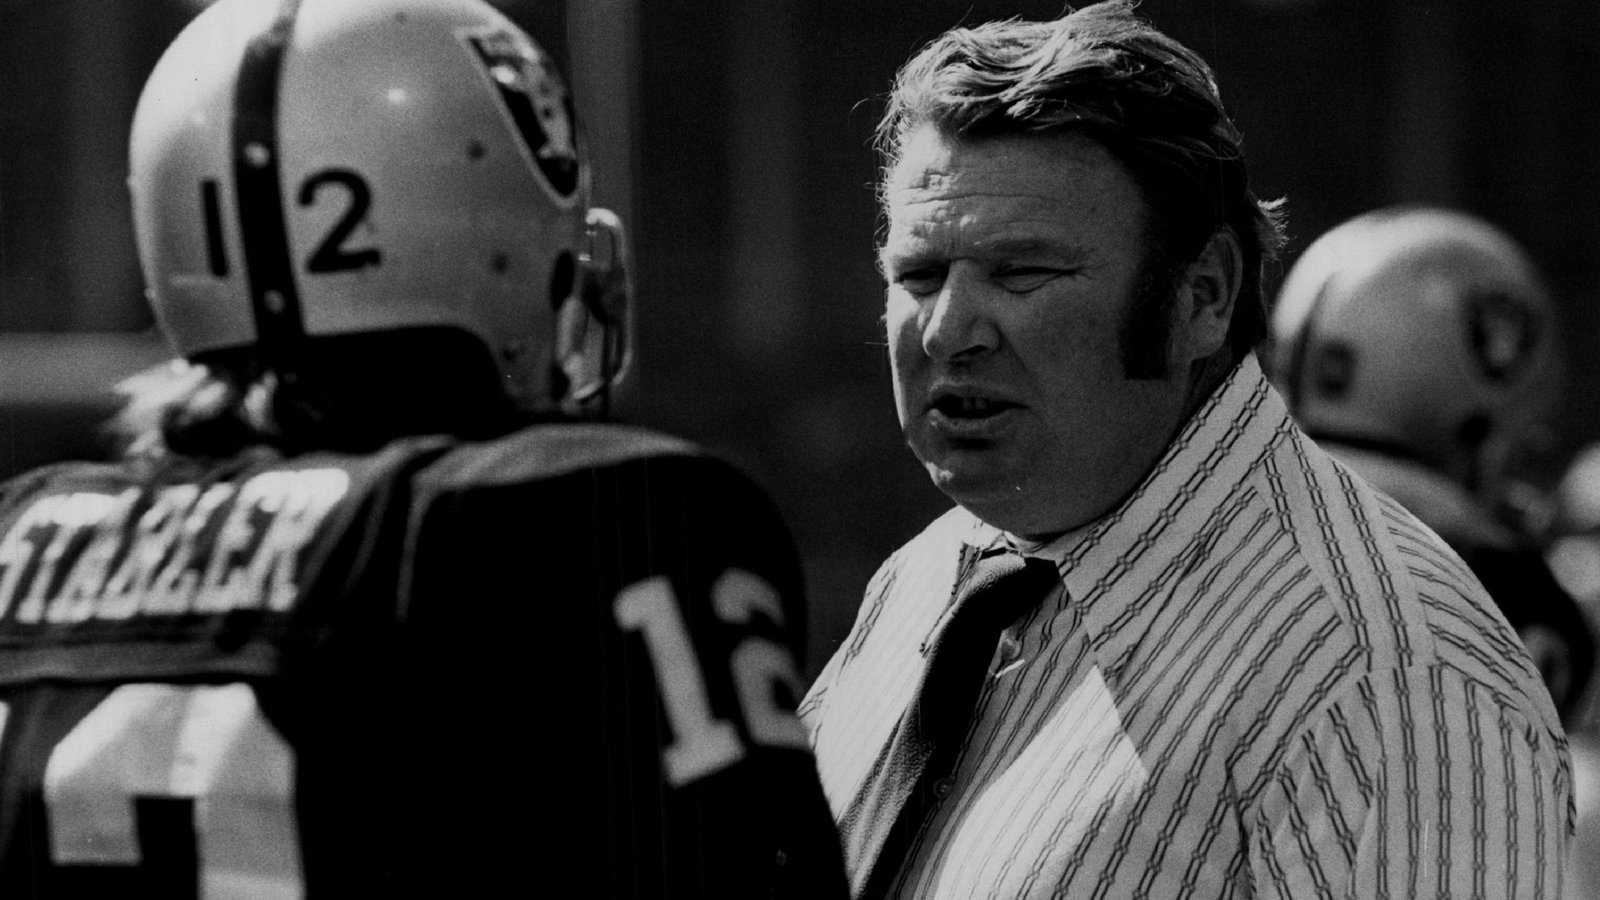 John Madden, legendary NFL coach and beloved broadcaster, dies